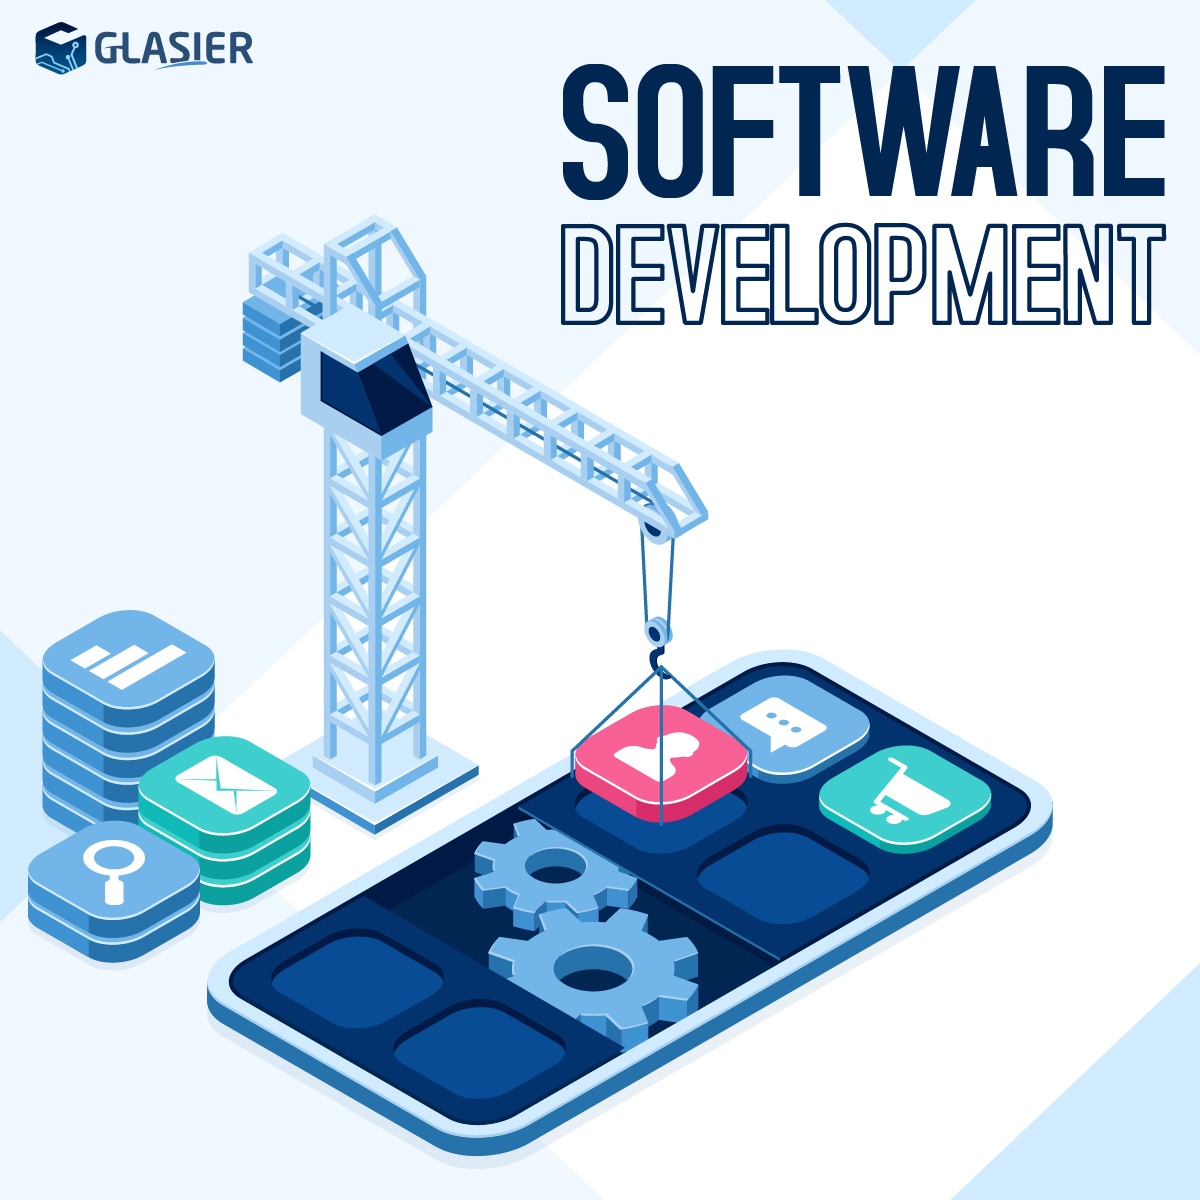 Software Development Company In India